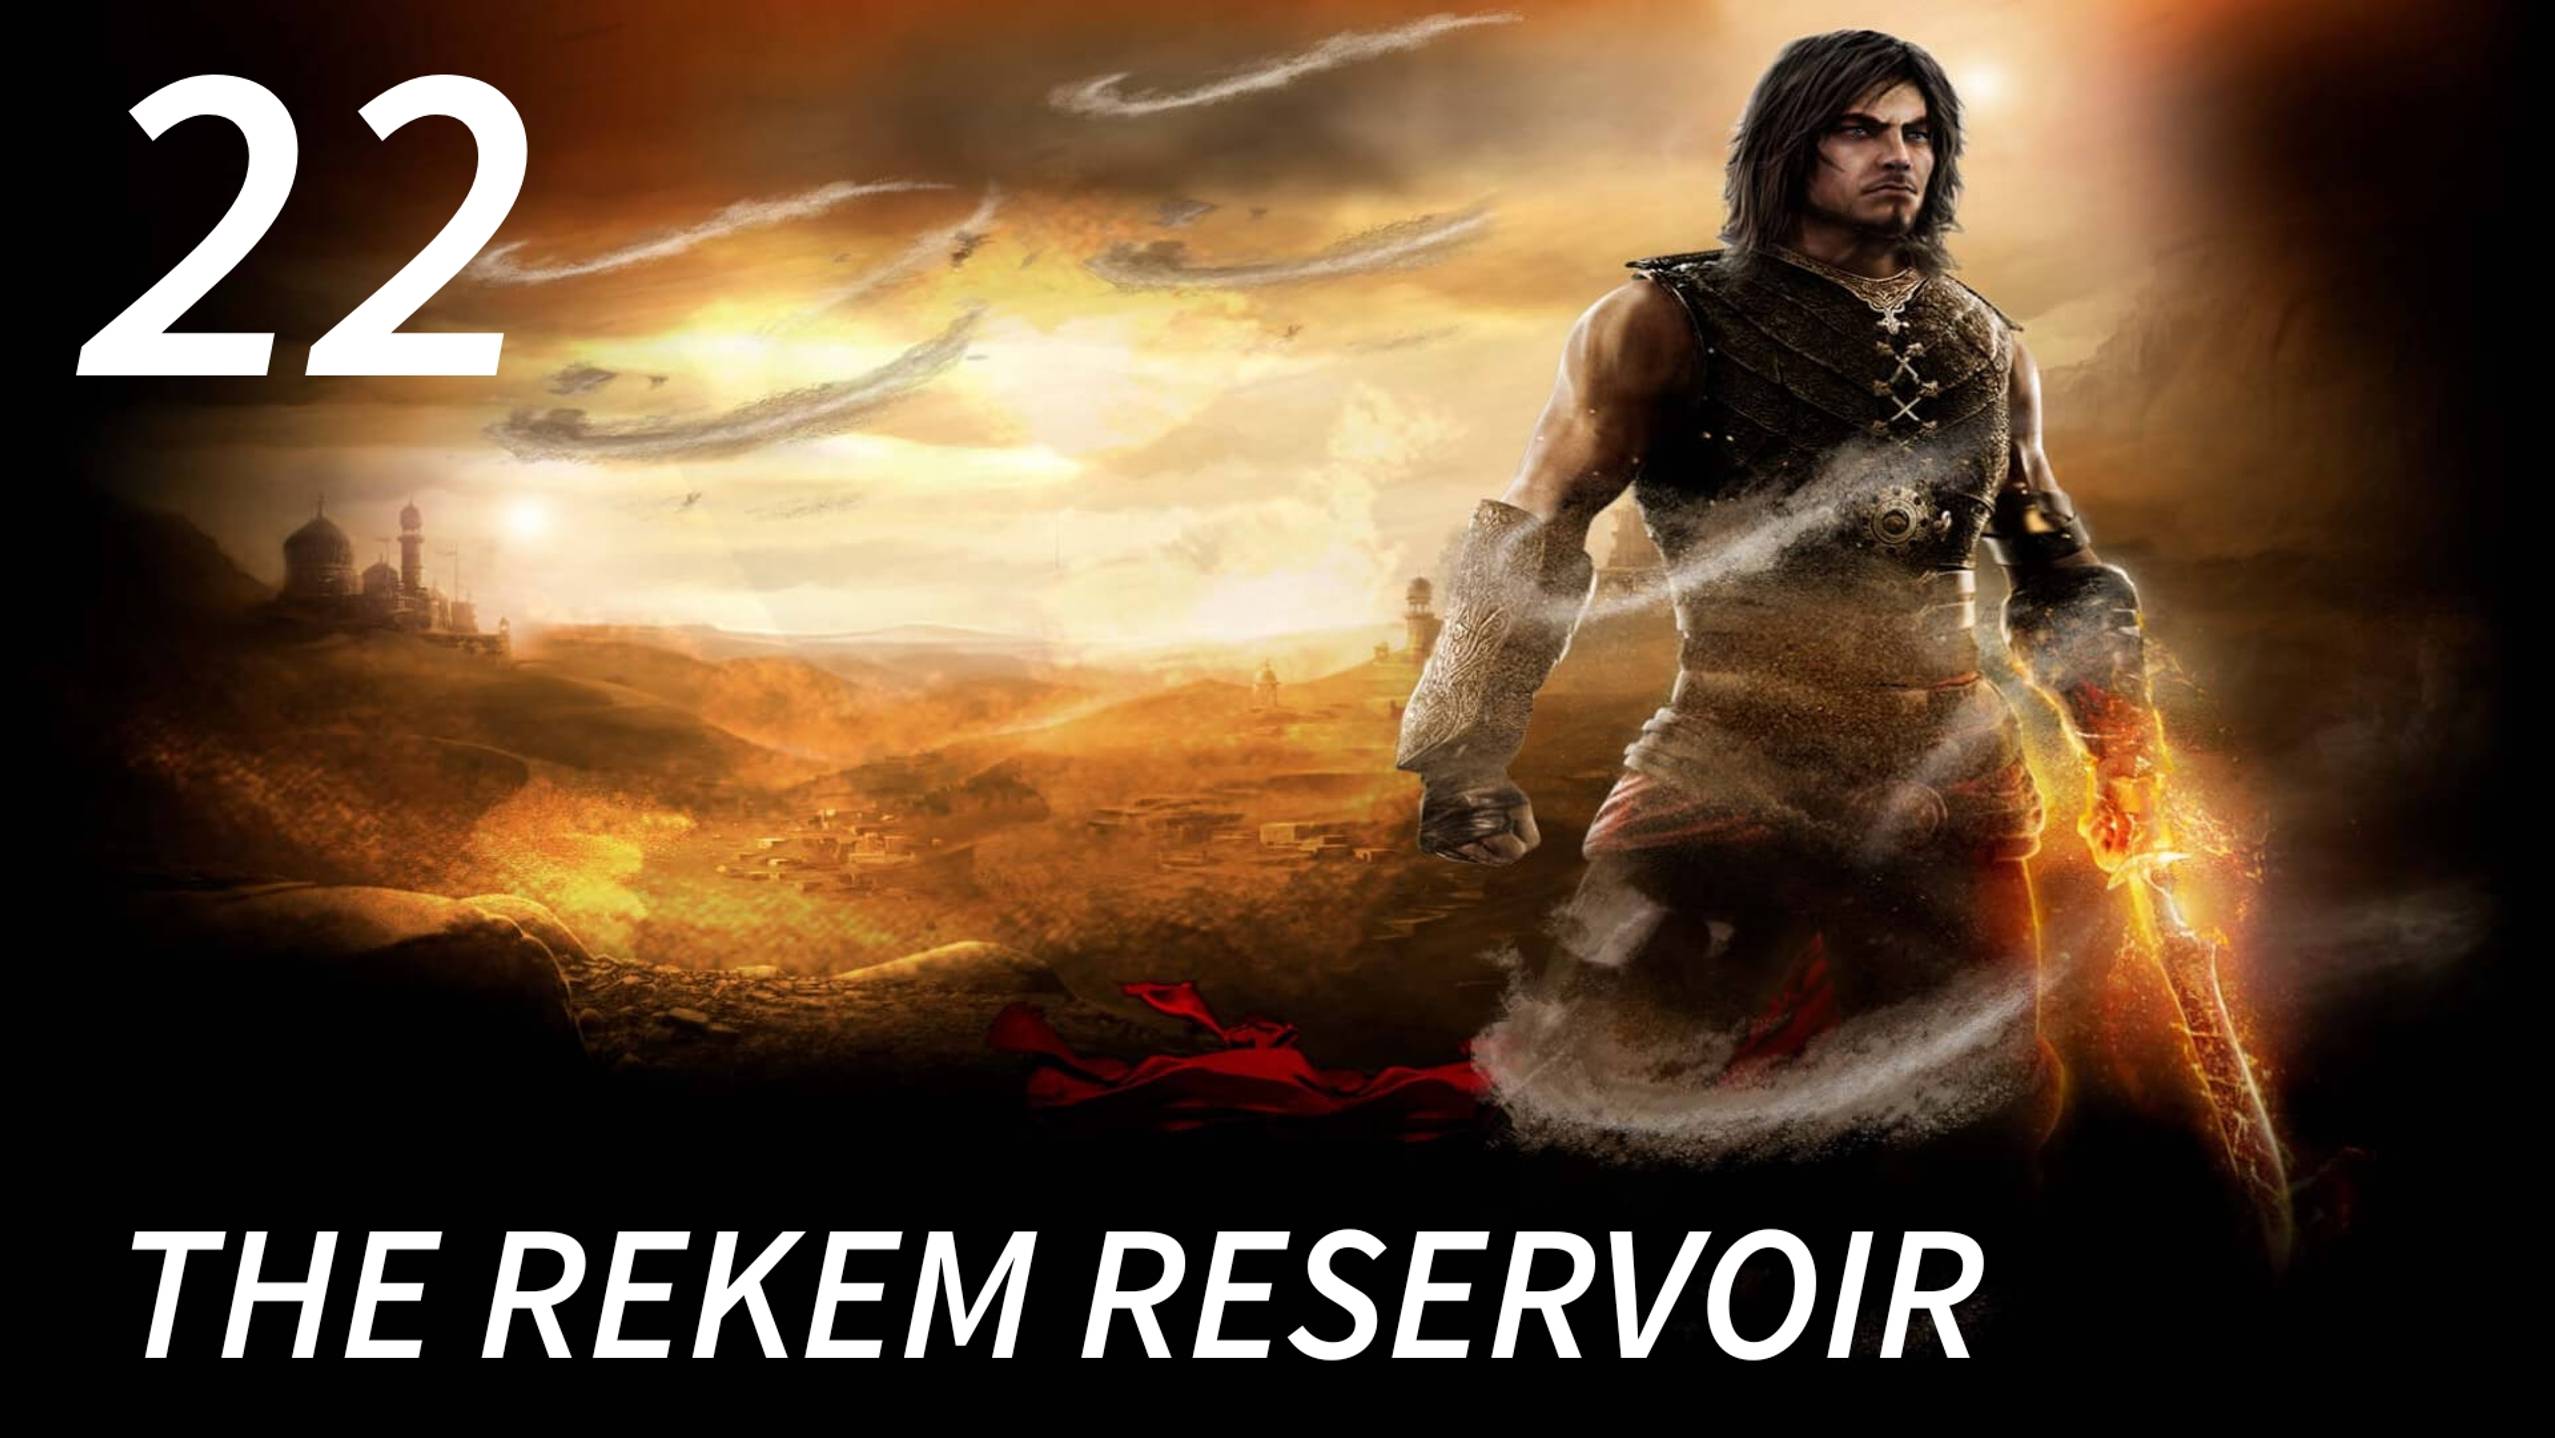 Prince of Persia: The Forgotten Sands / The Rekem Reservoir